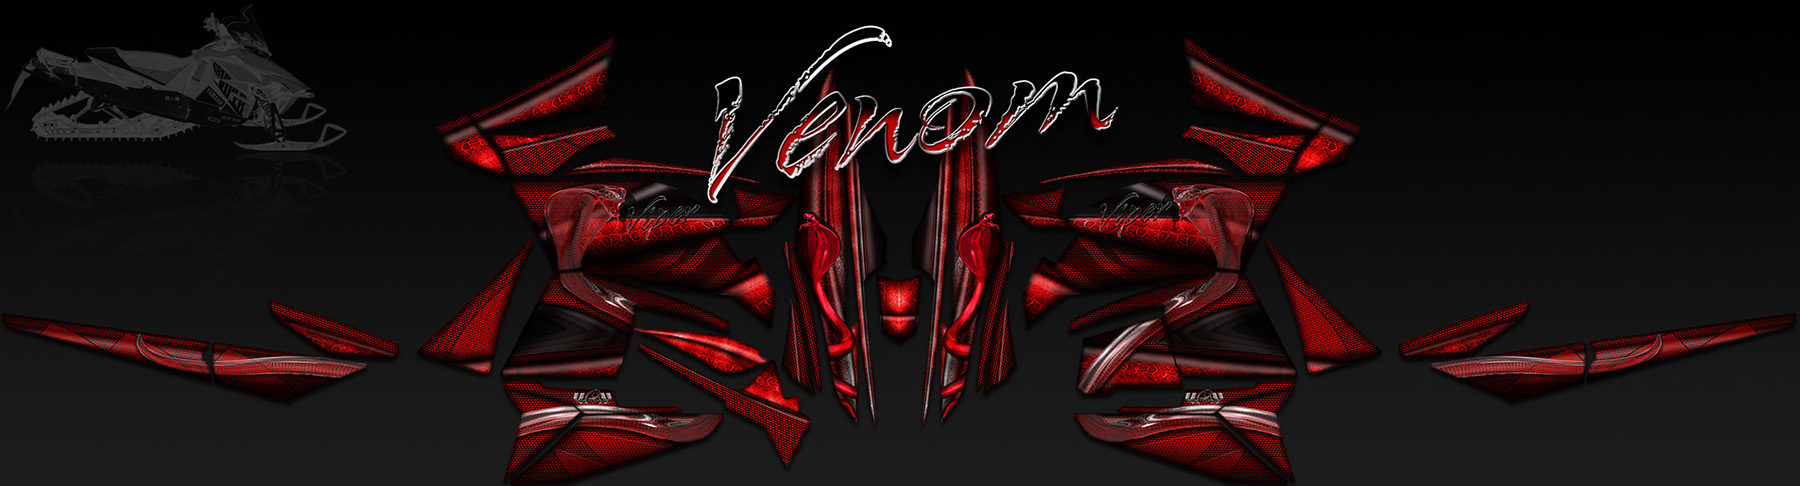 Viper red sled wrap design